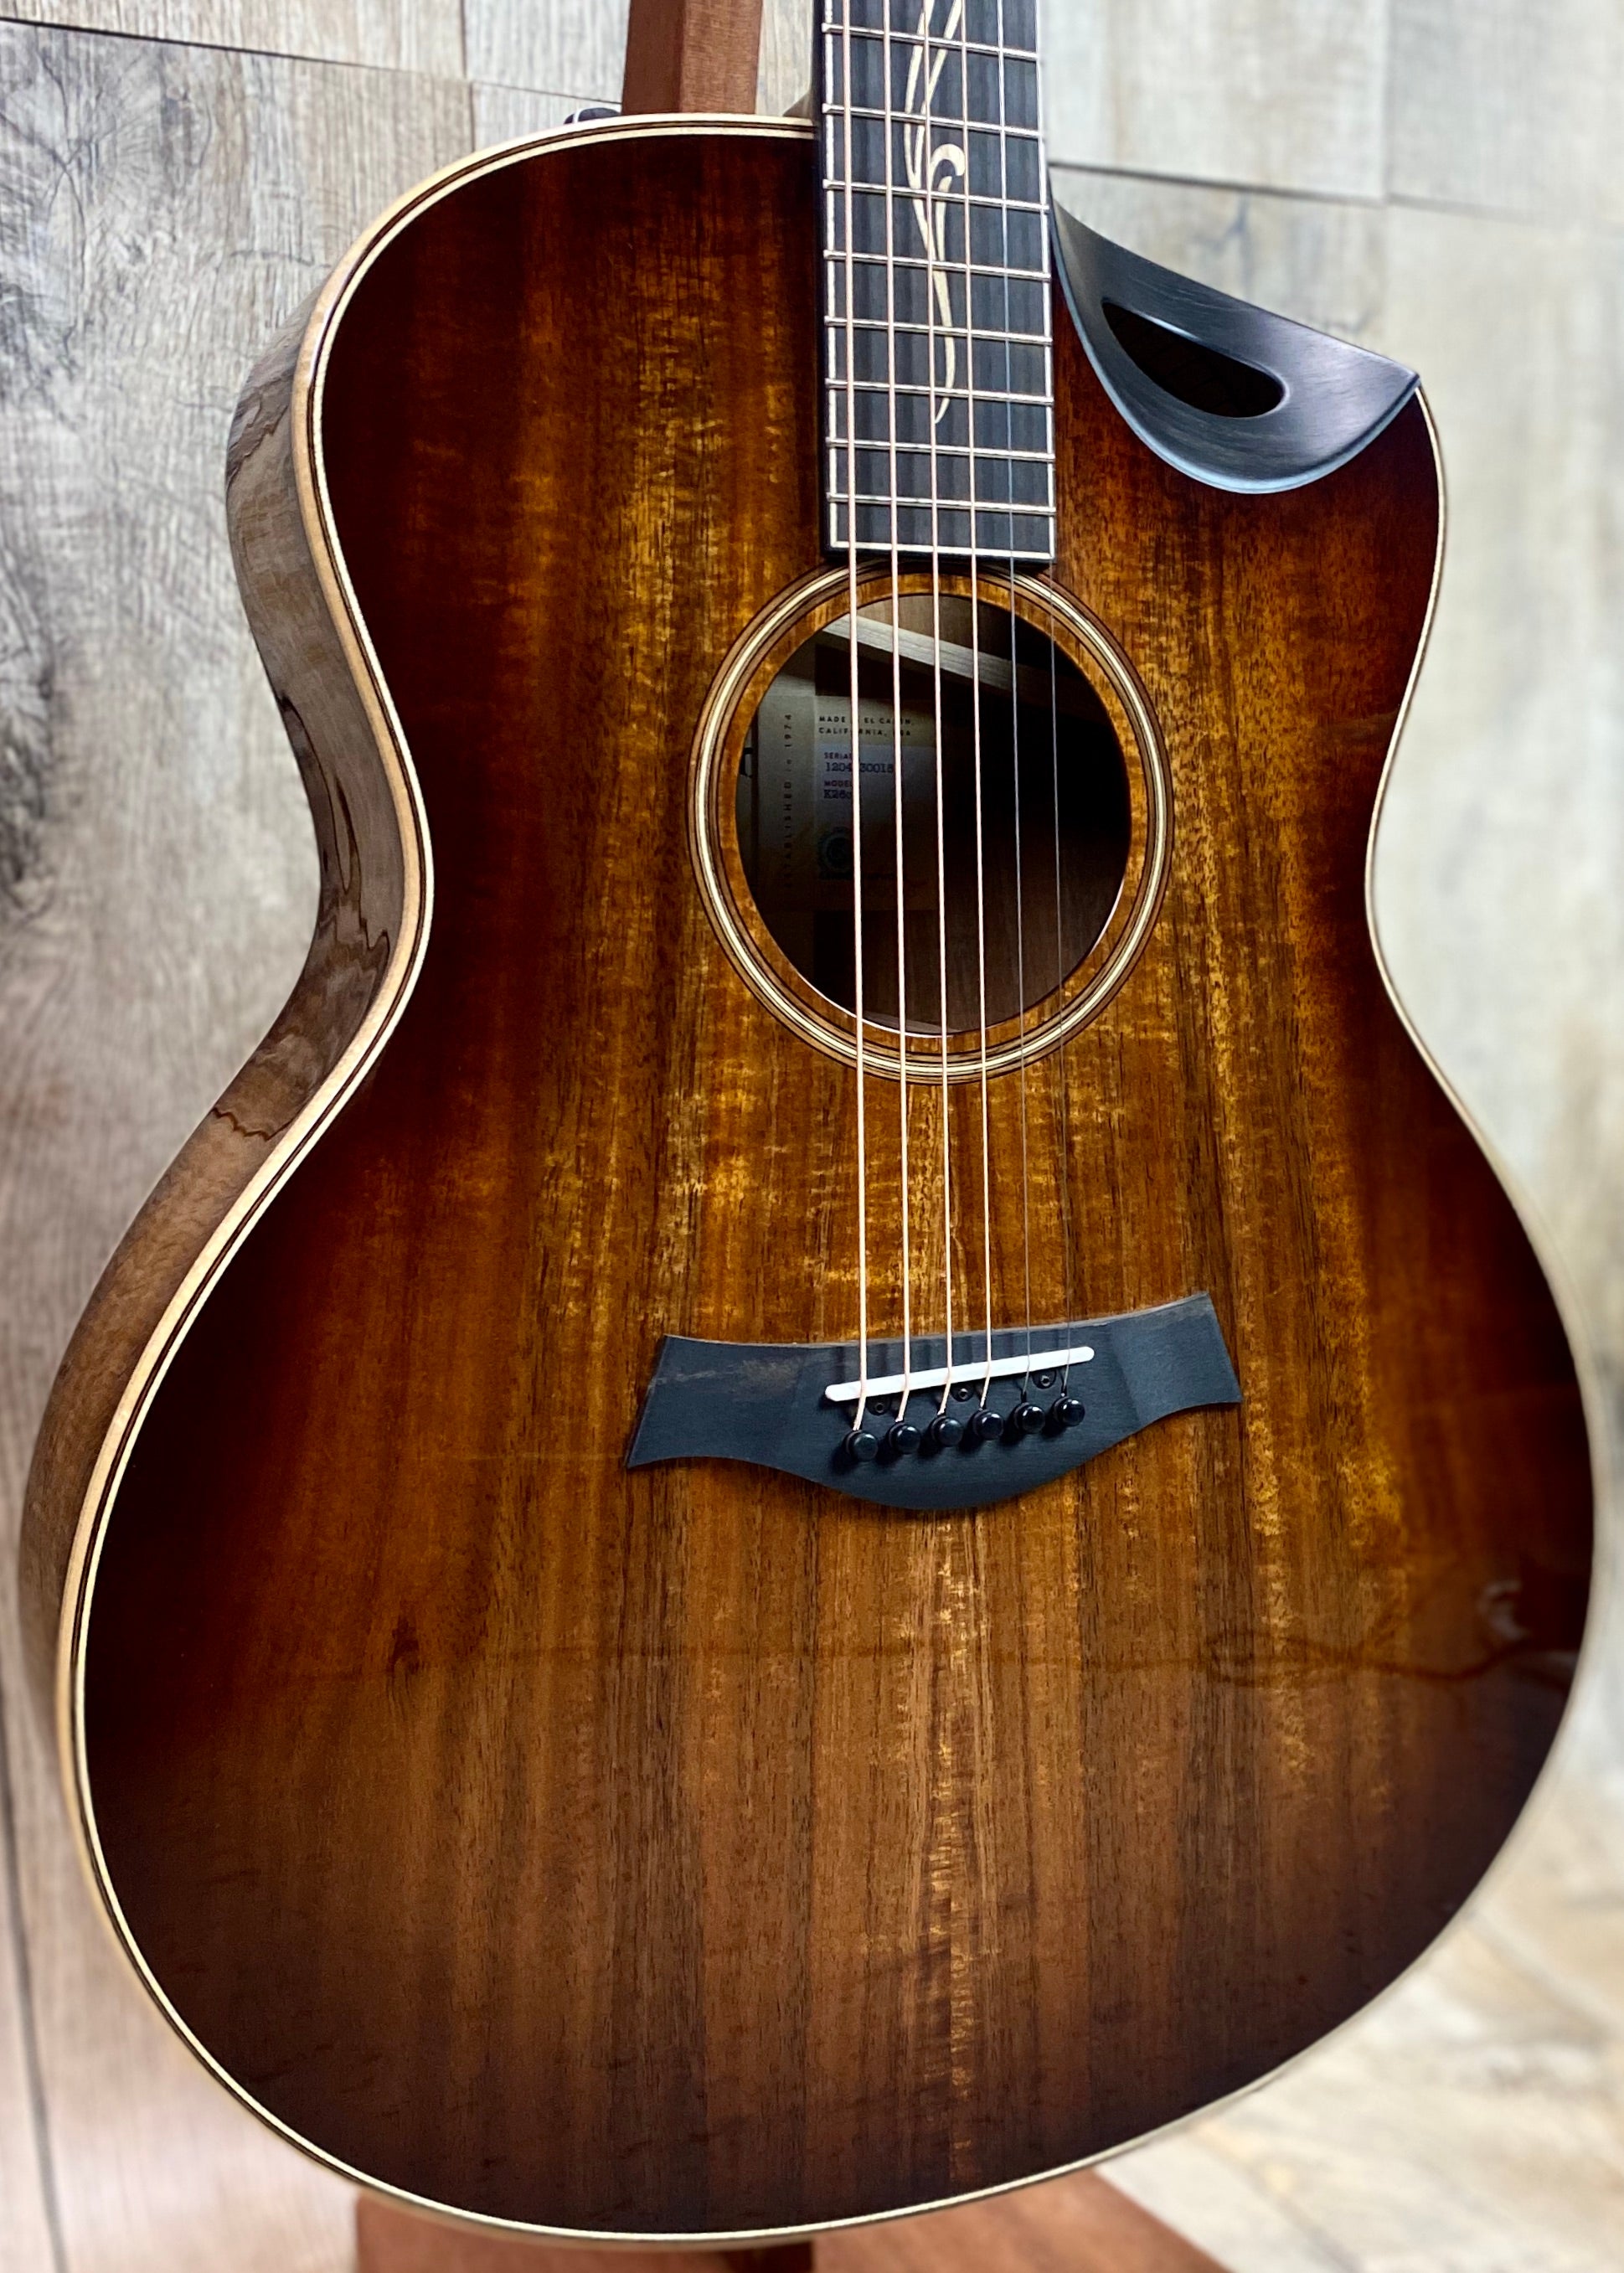 Taylor K26ce Acoustic Guitar body in Shaded Edgeburst Tone Shop Guitars Dallas Texas